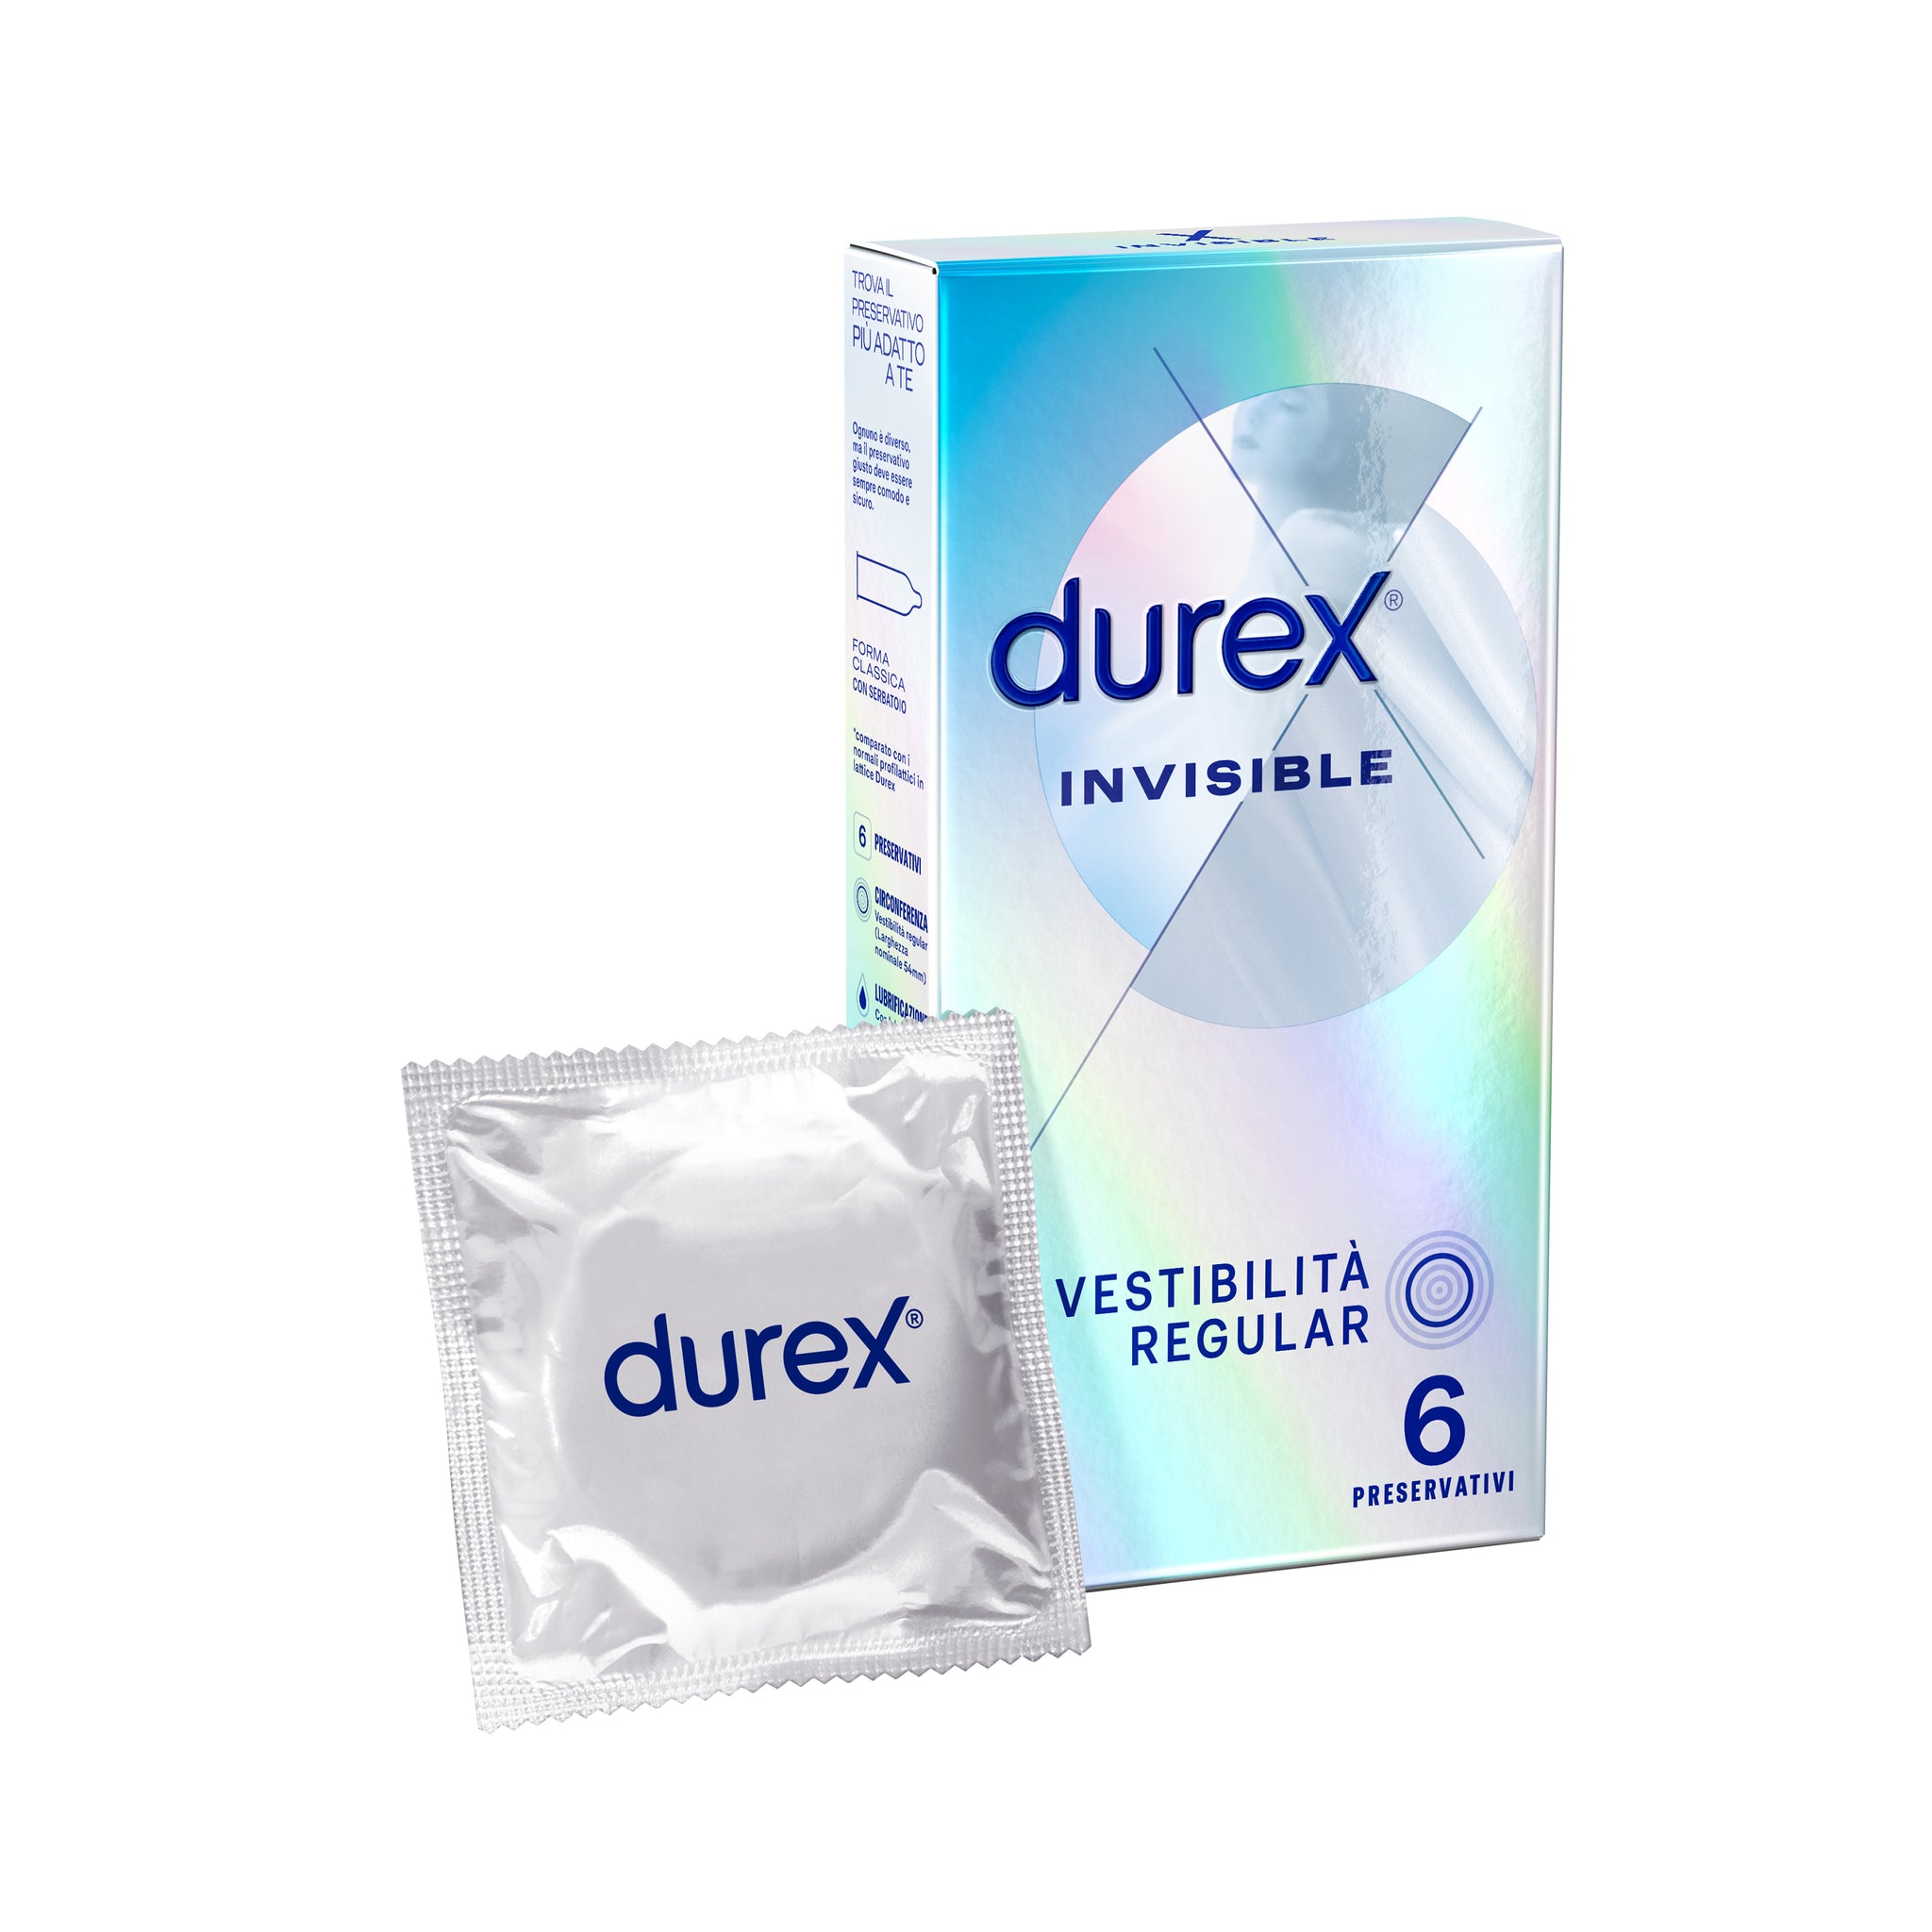 DUREX INVISIBLE 6pz